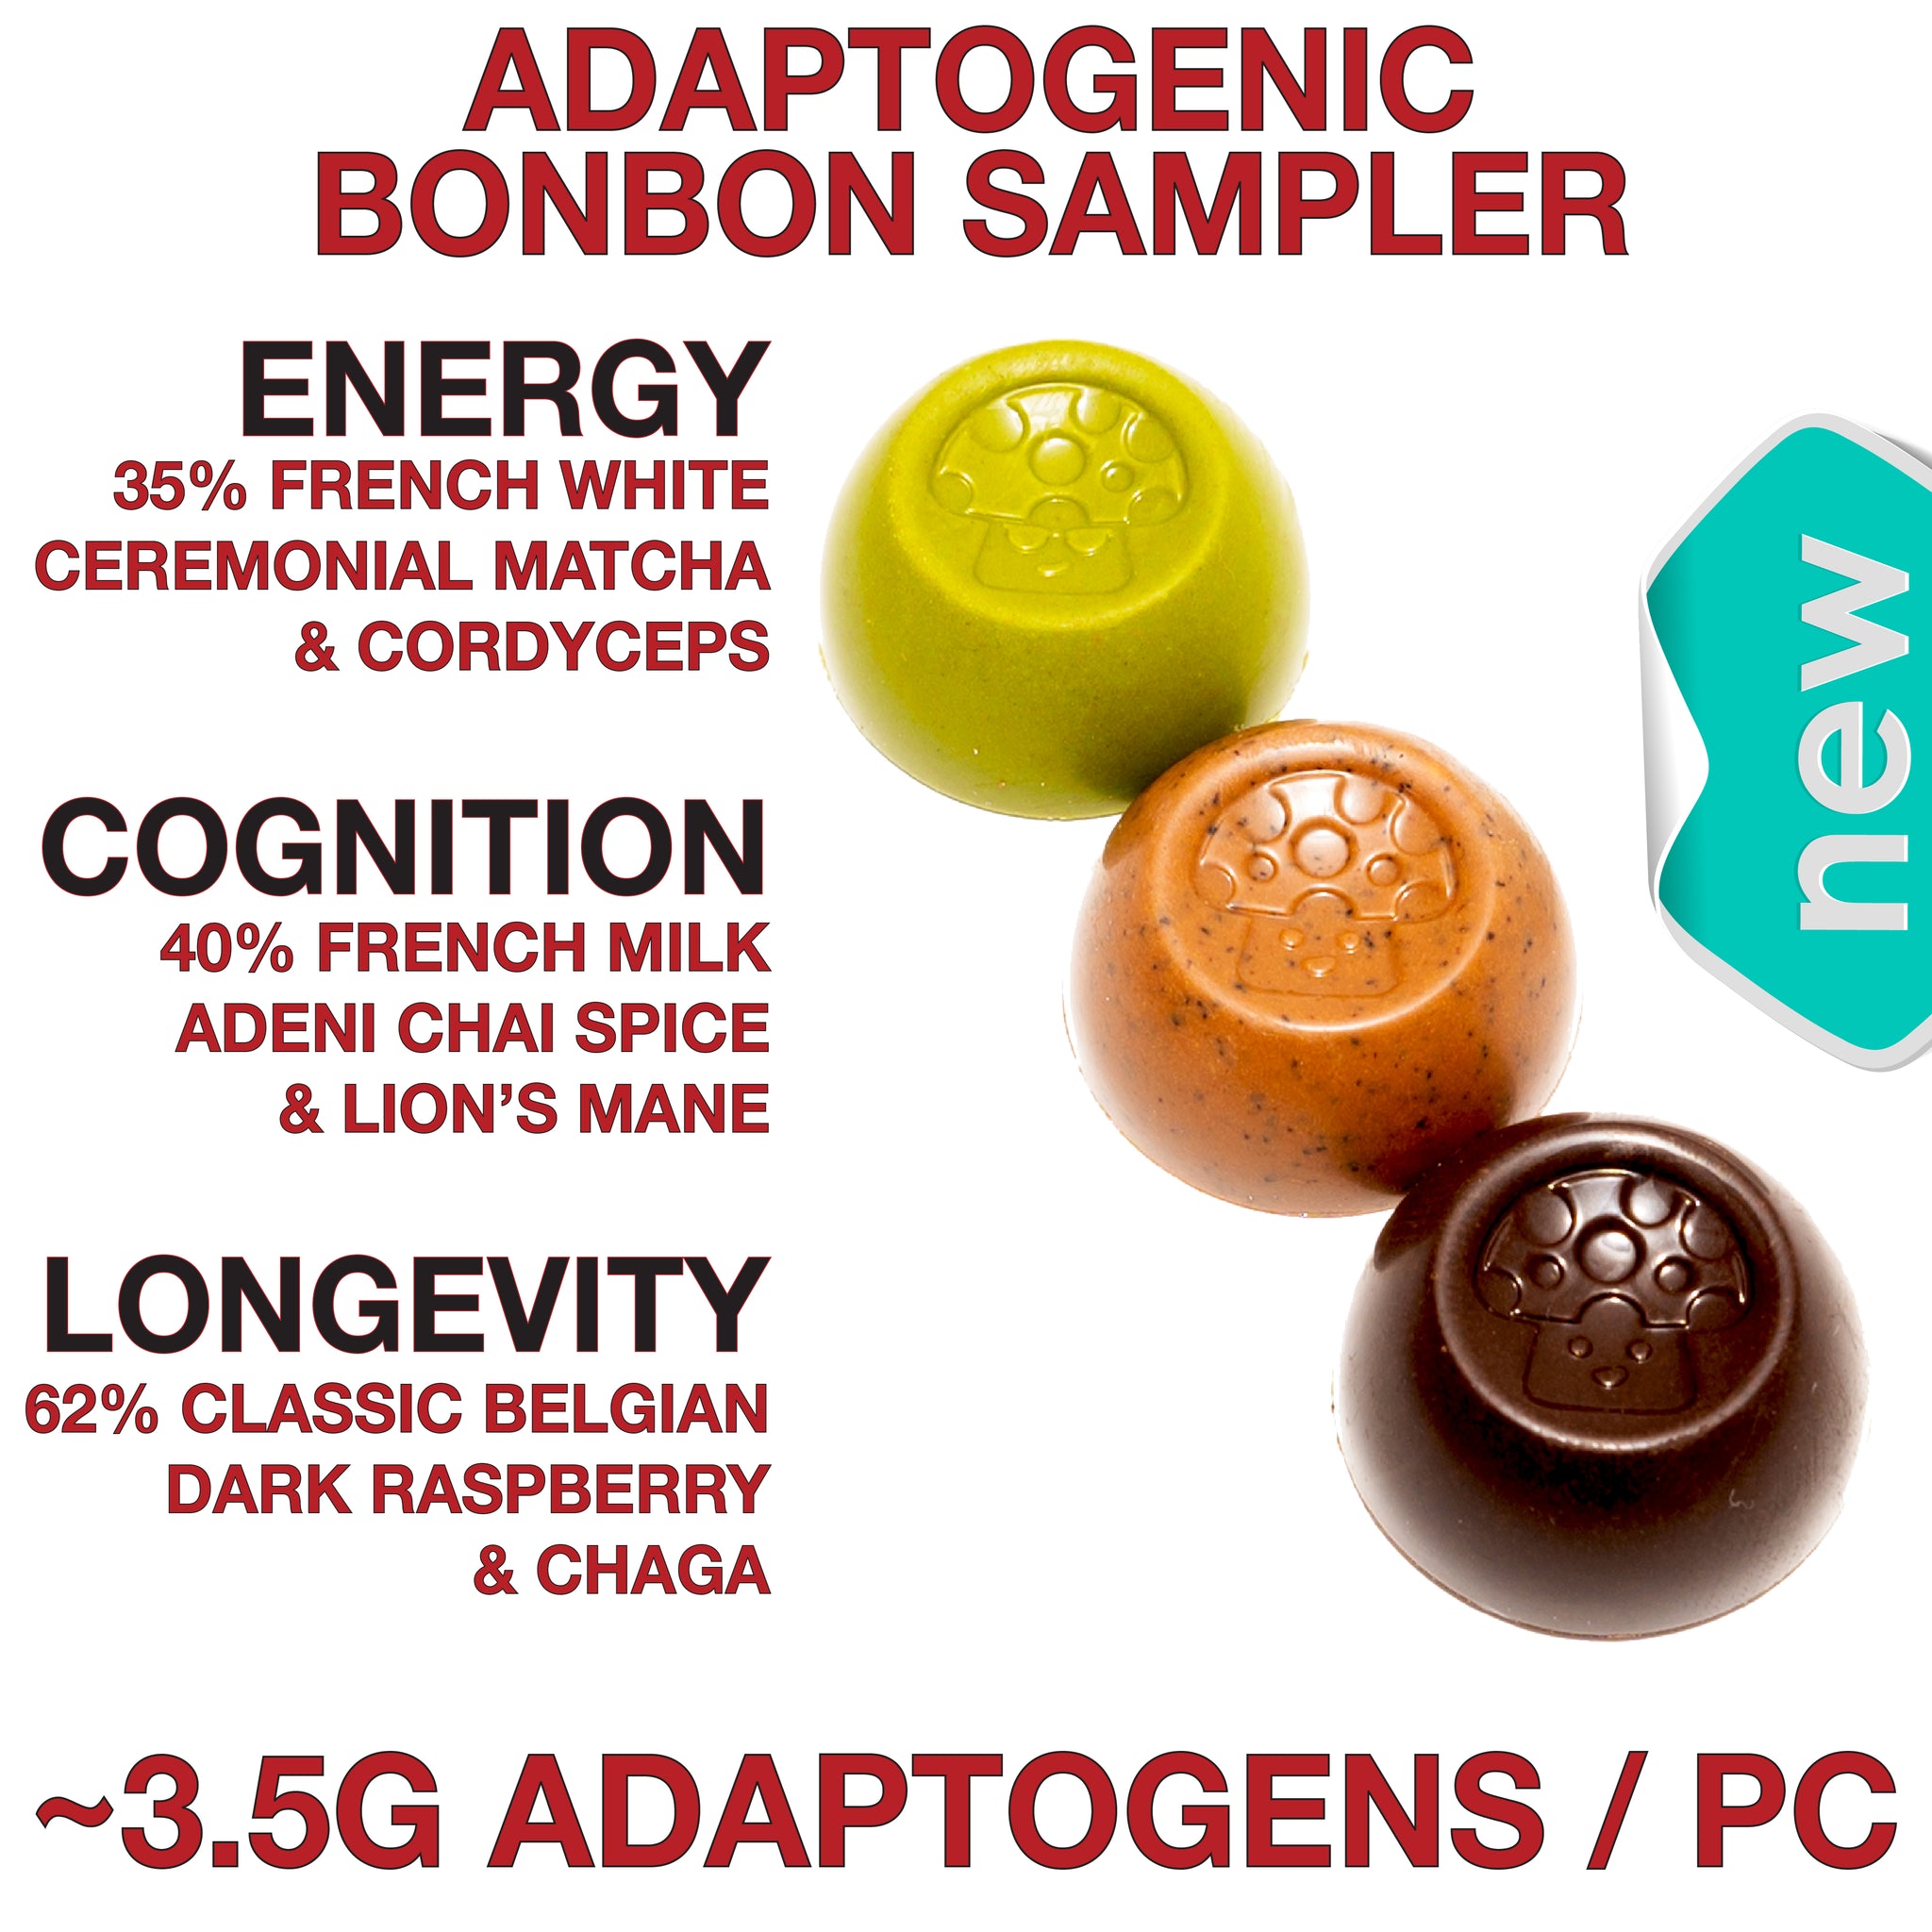 Adaptogenic BonBon Sampler - Energy, Congnition & Longevity.